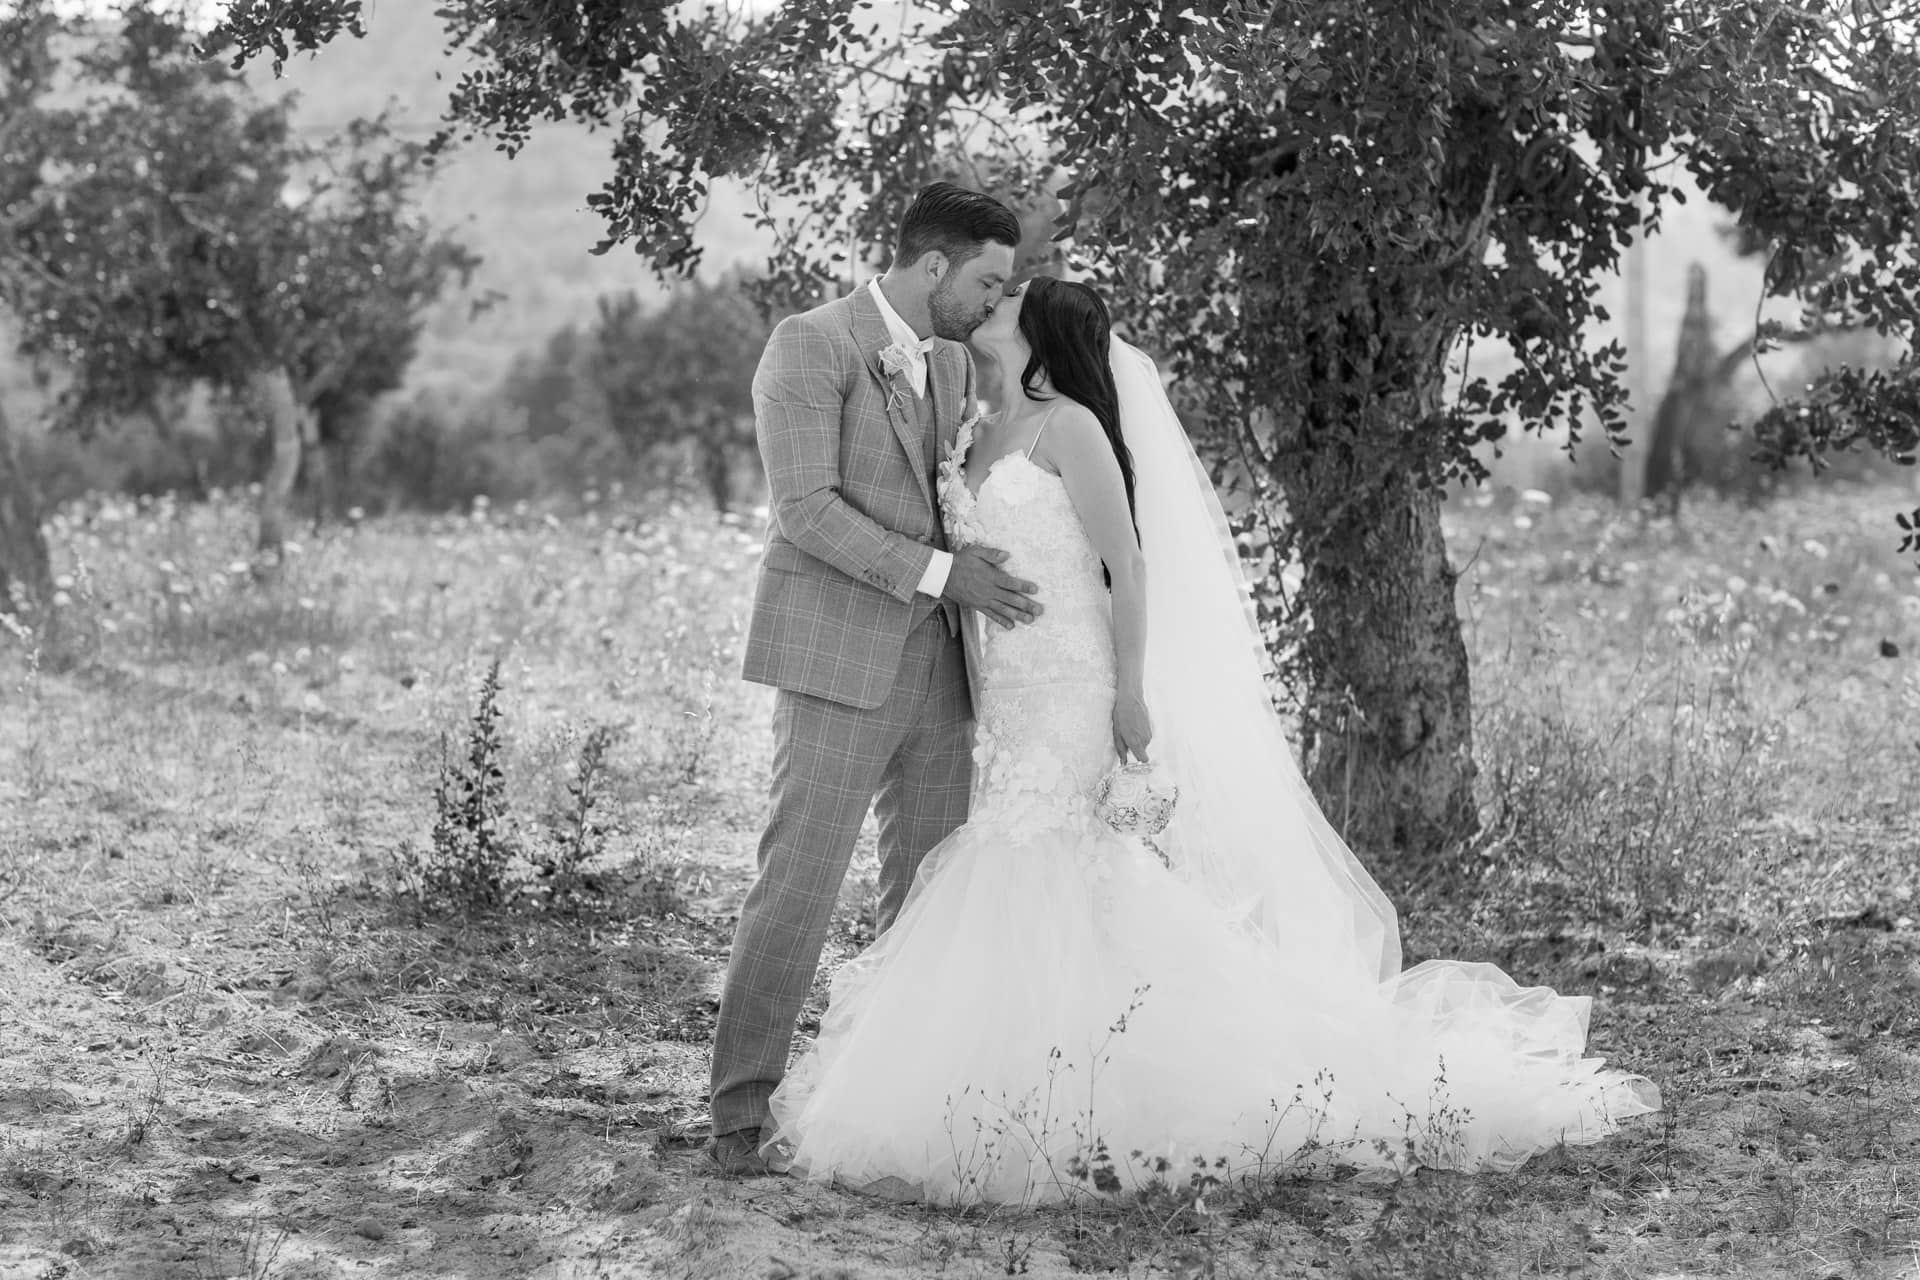 black and white wedding shot